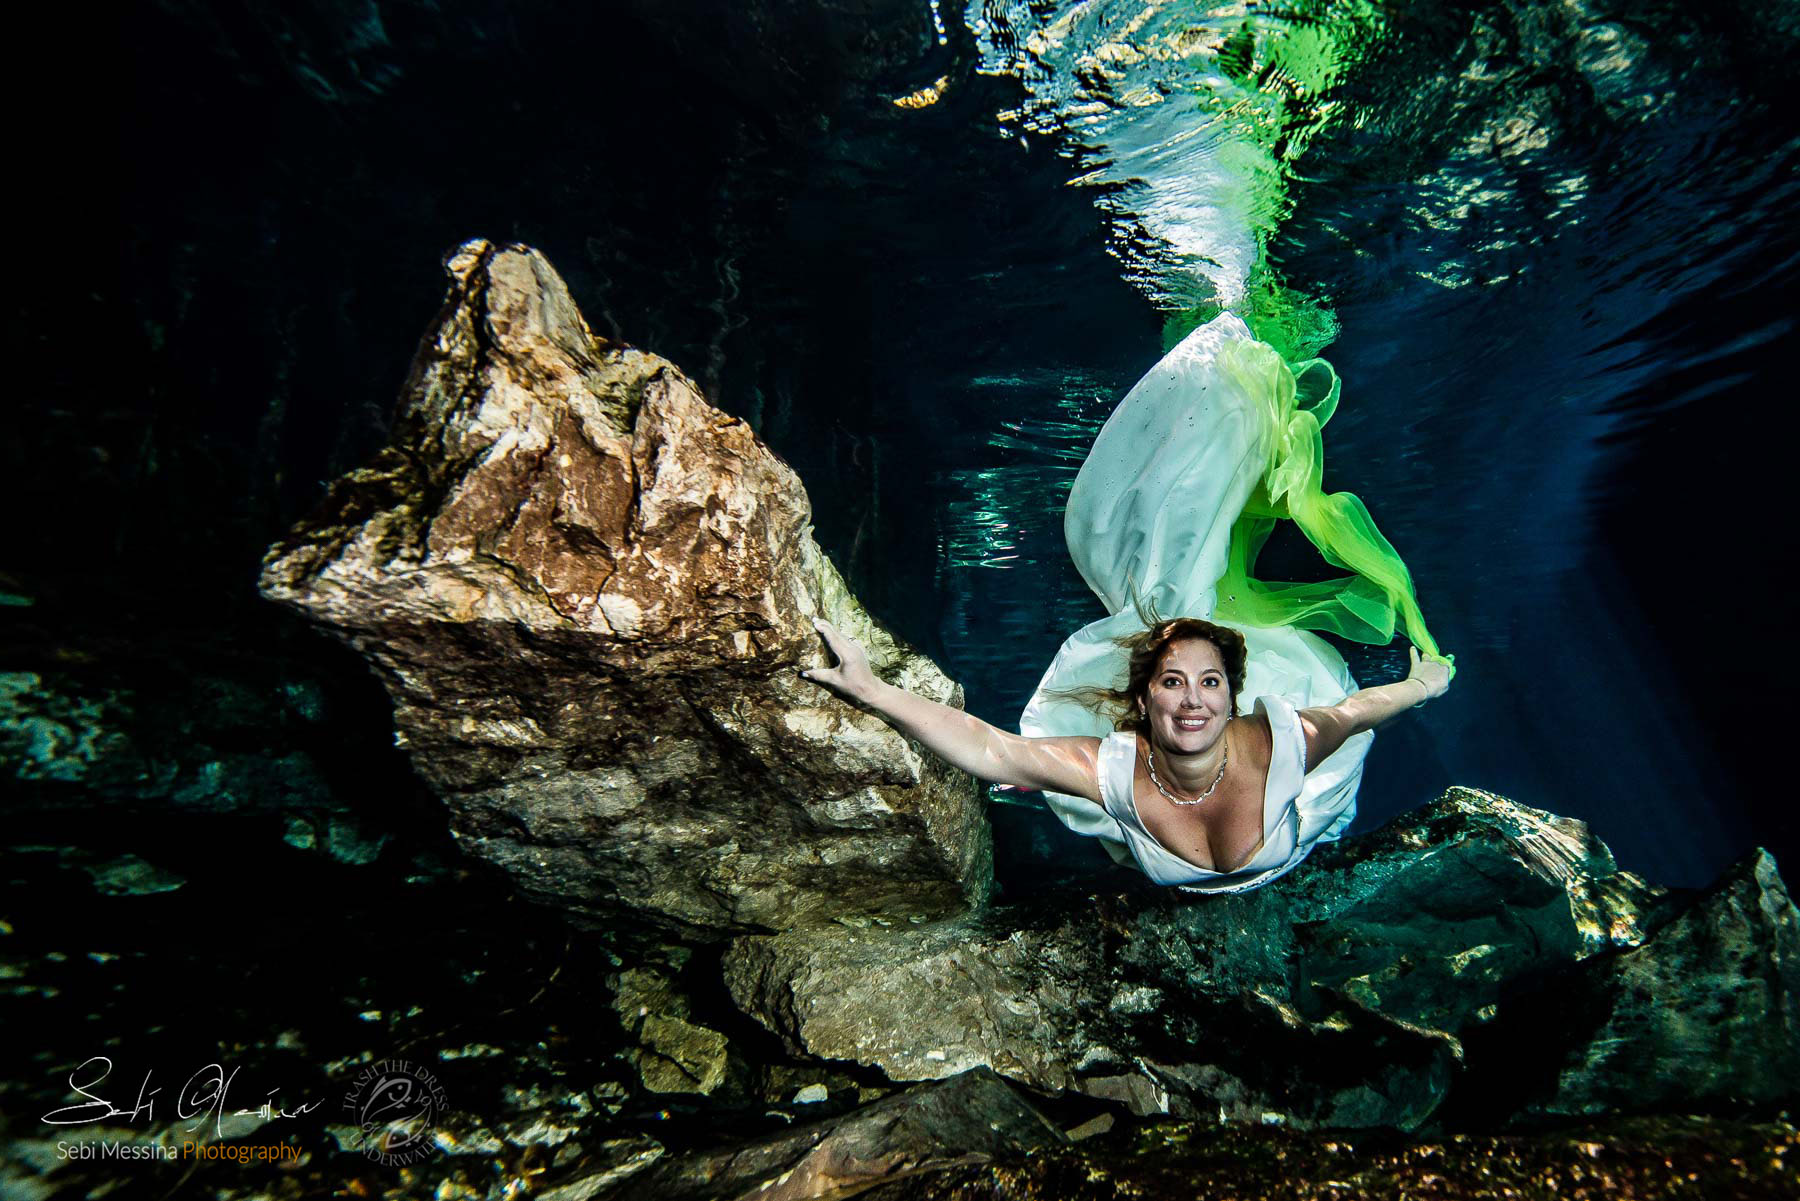 Underwater Trash The Dress Tulum - Sebi Messina Photography